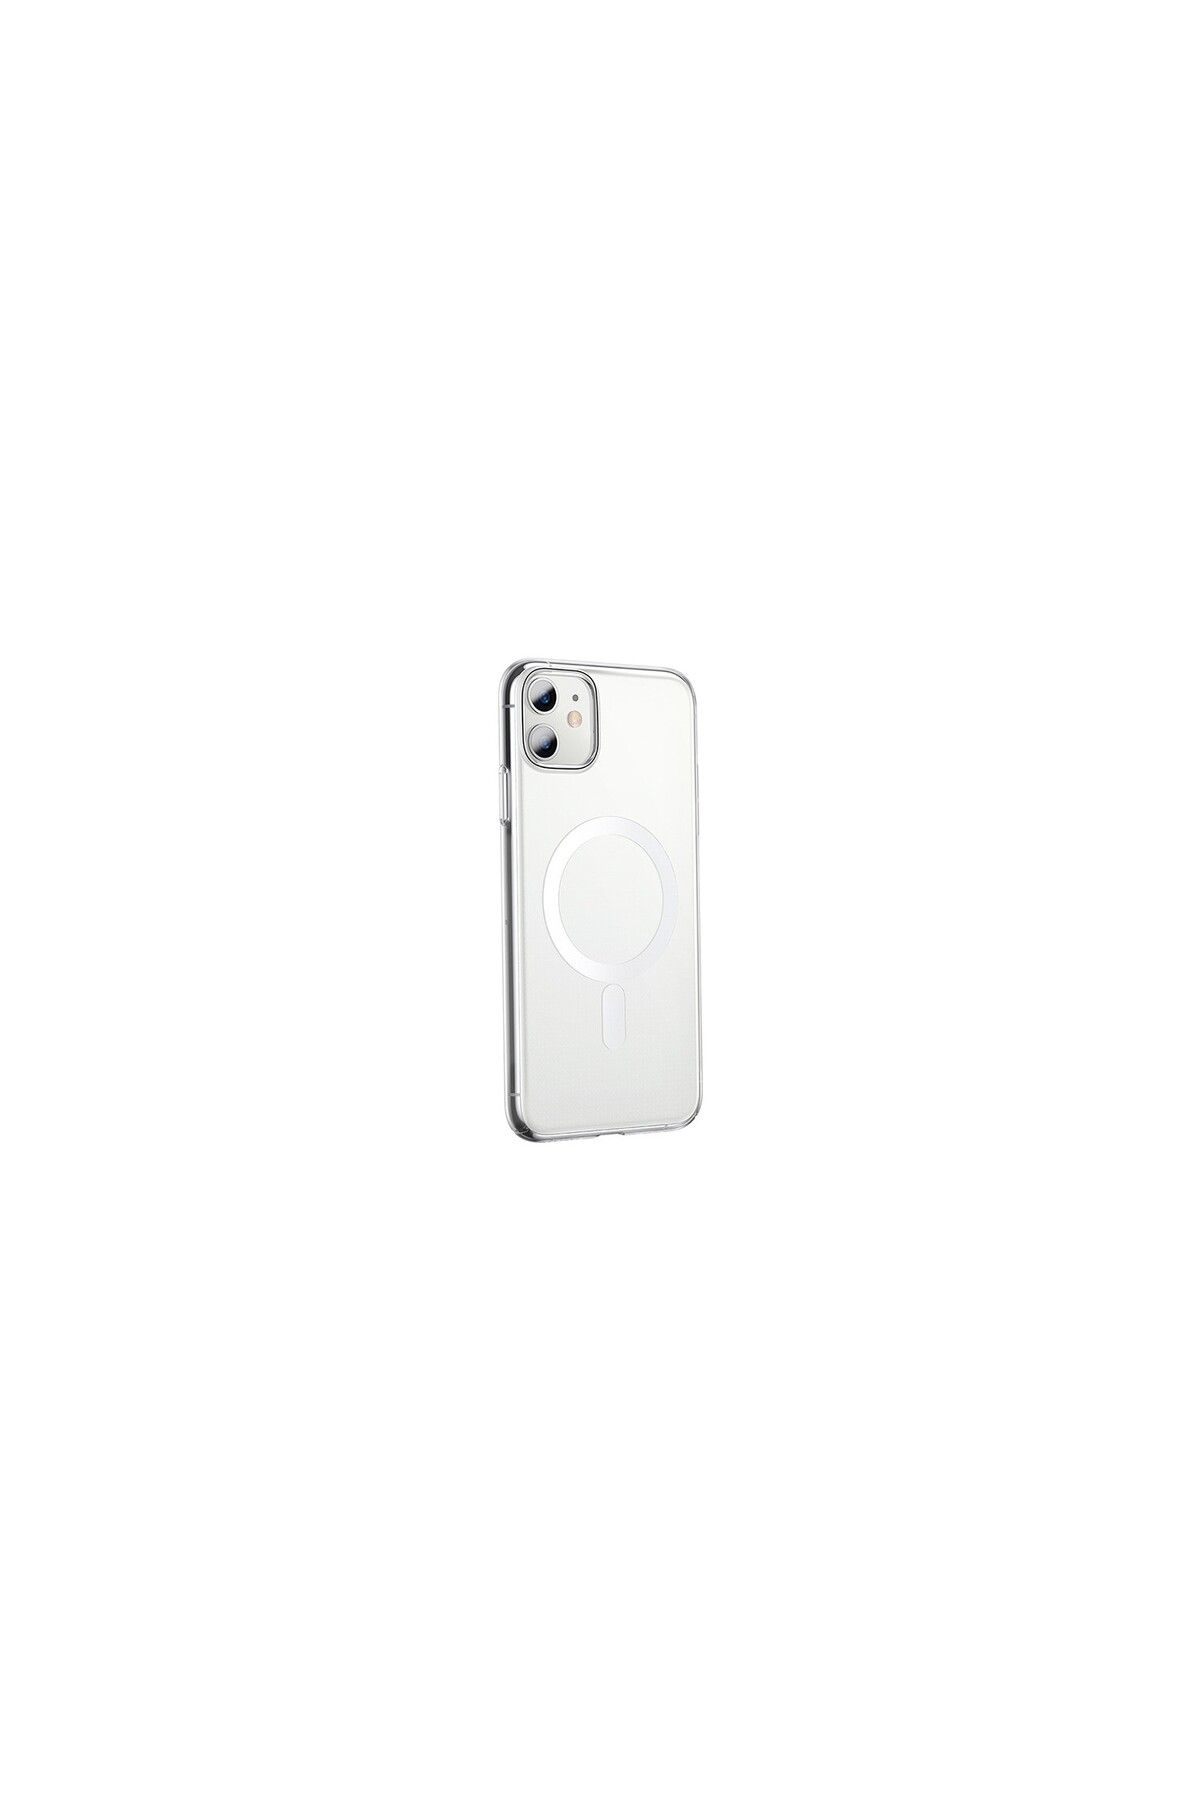 sommeow Baseus Crystal Iphone 11 Magsafe Silikon Kılıf Tempered Ekran Koruyucu Set Arjt000802